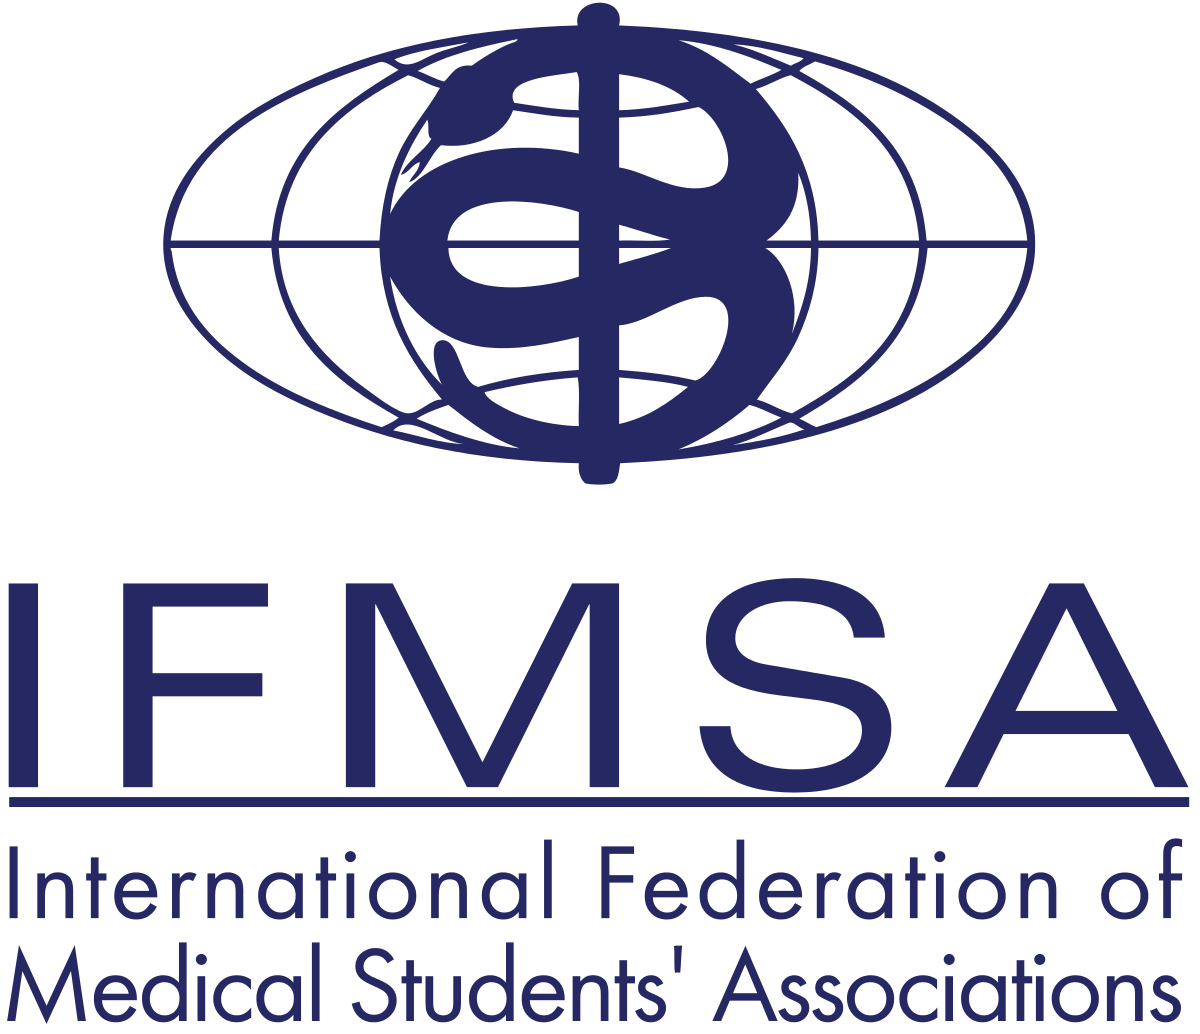 International Federation of Medical Students’ Associations - Amsterdam